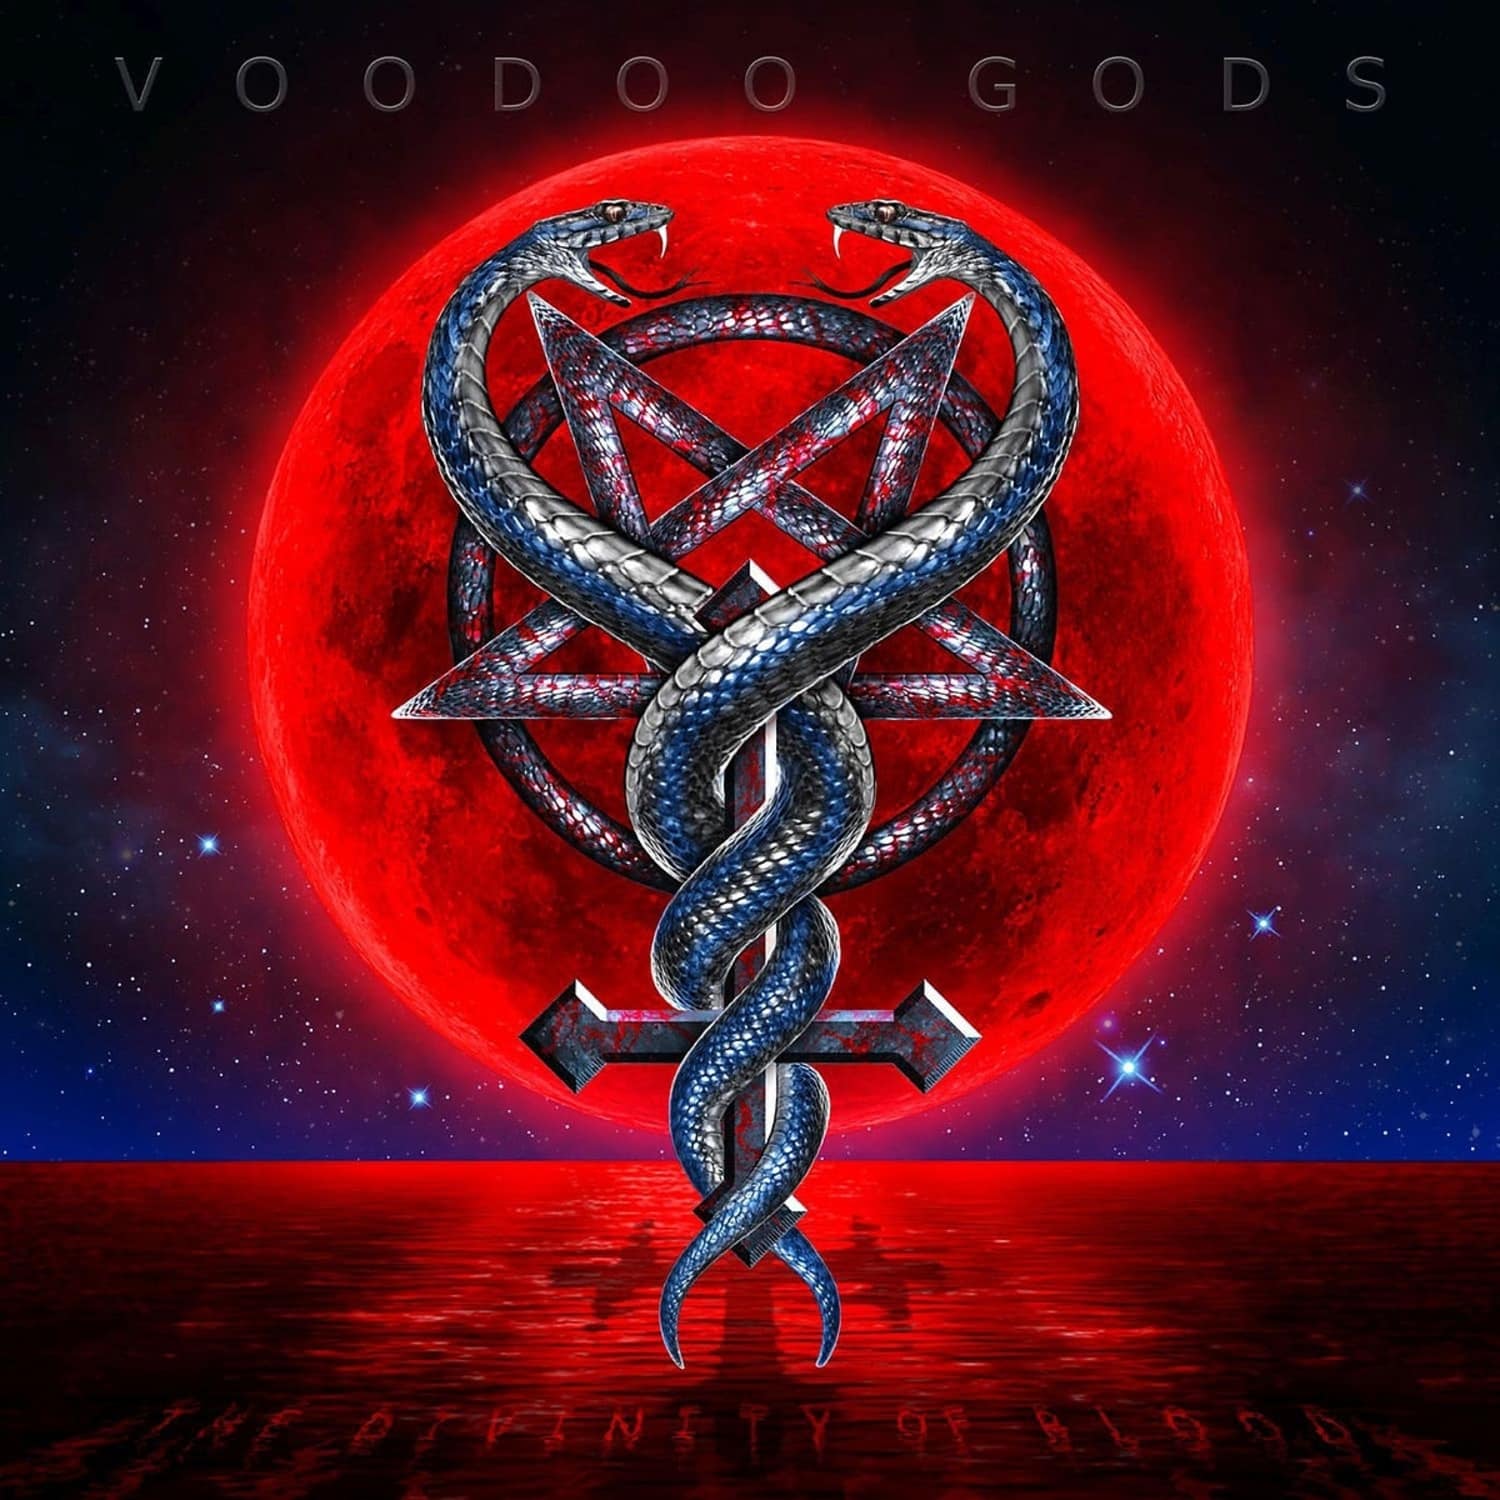 Voodoo Gods - THE DIVINITY OF BLOOD 